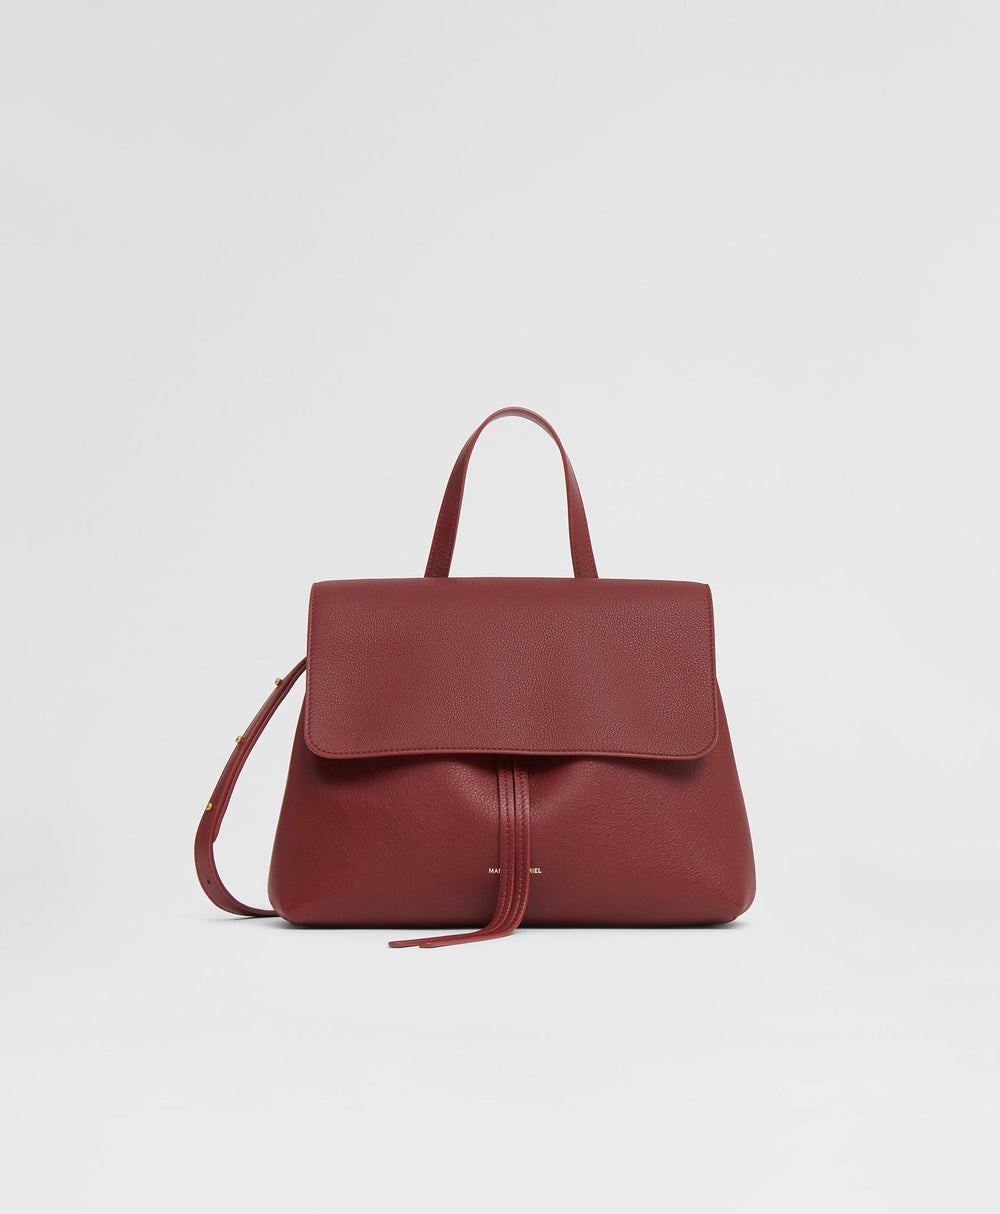 Mansur Gavriel Women's Red Flat 100% Suede Clutch Bag